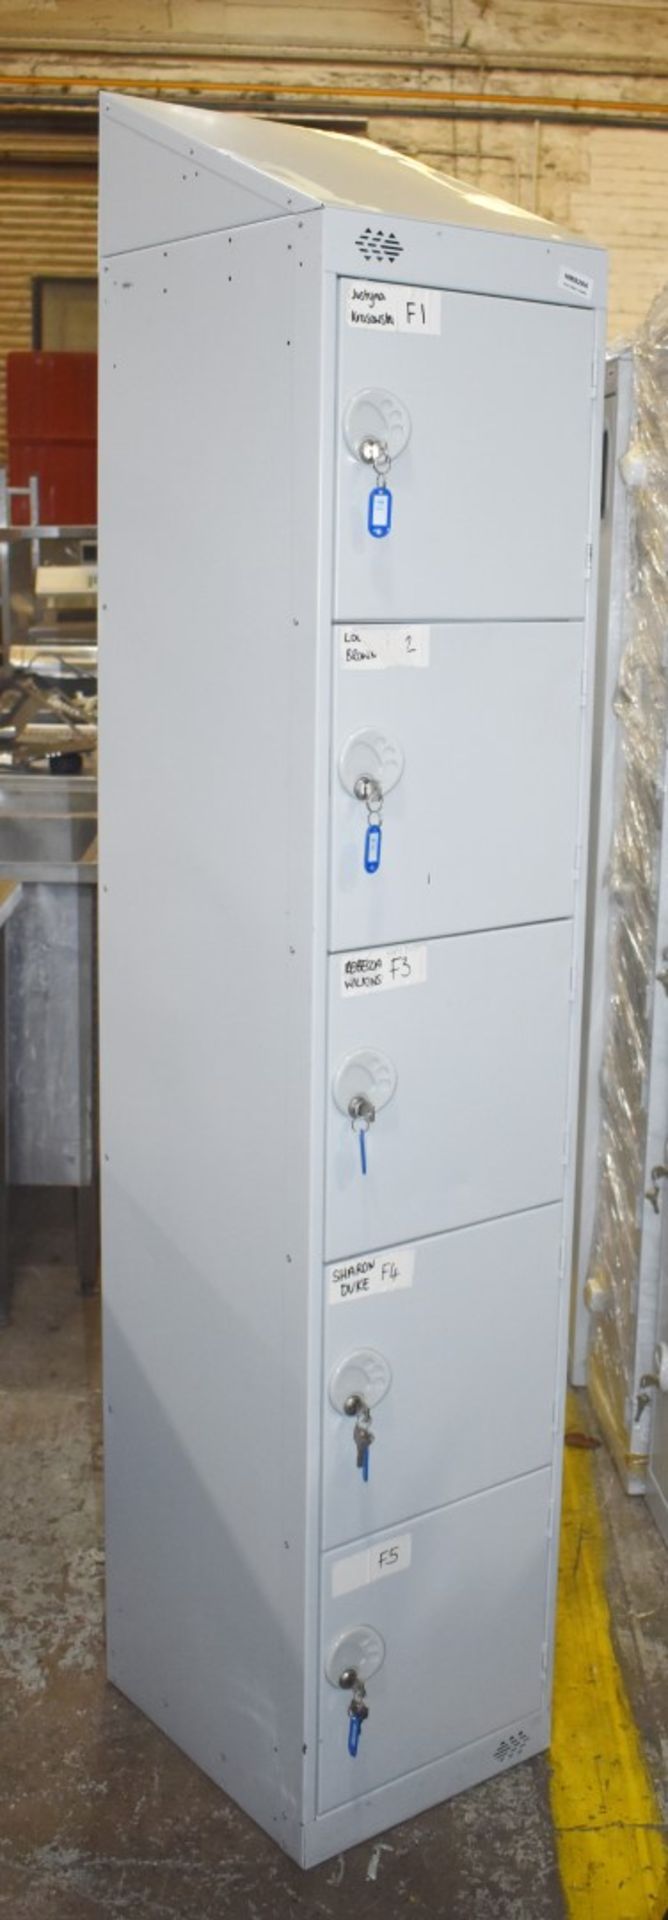 1 x Link Biocote 5 Door Staff Locker in Grey With Keys and Anti Clutter Slope Top - Very Good Pre-